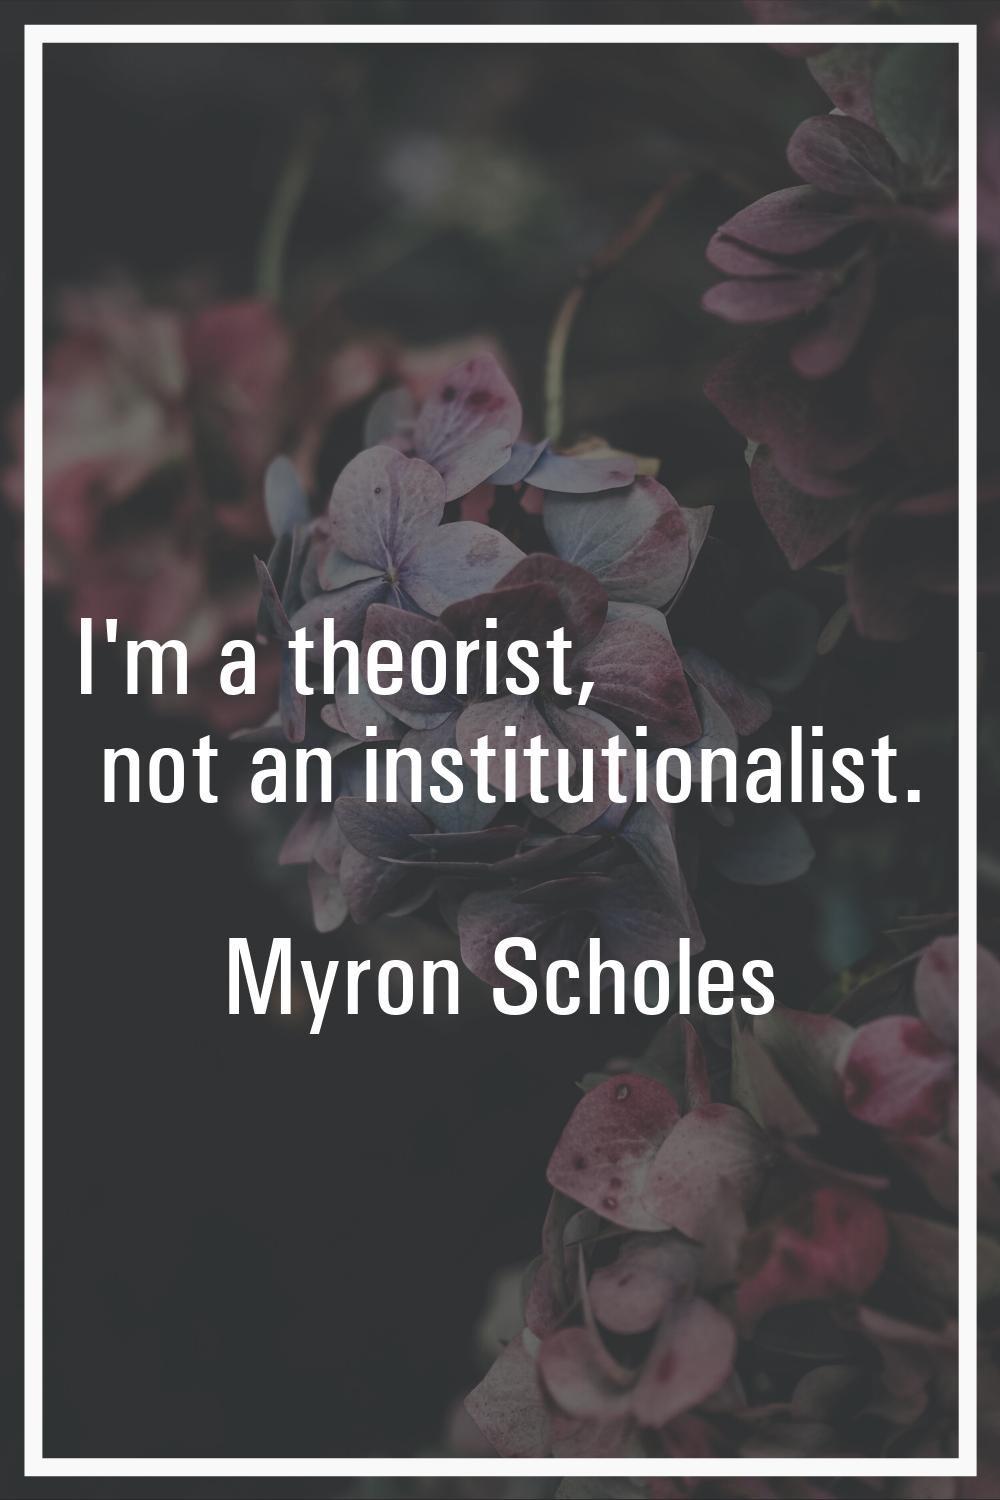 I'm a theorist, not an institutionalist.